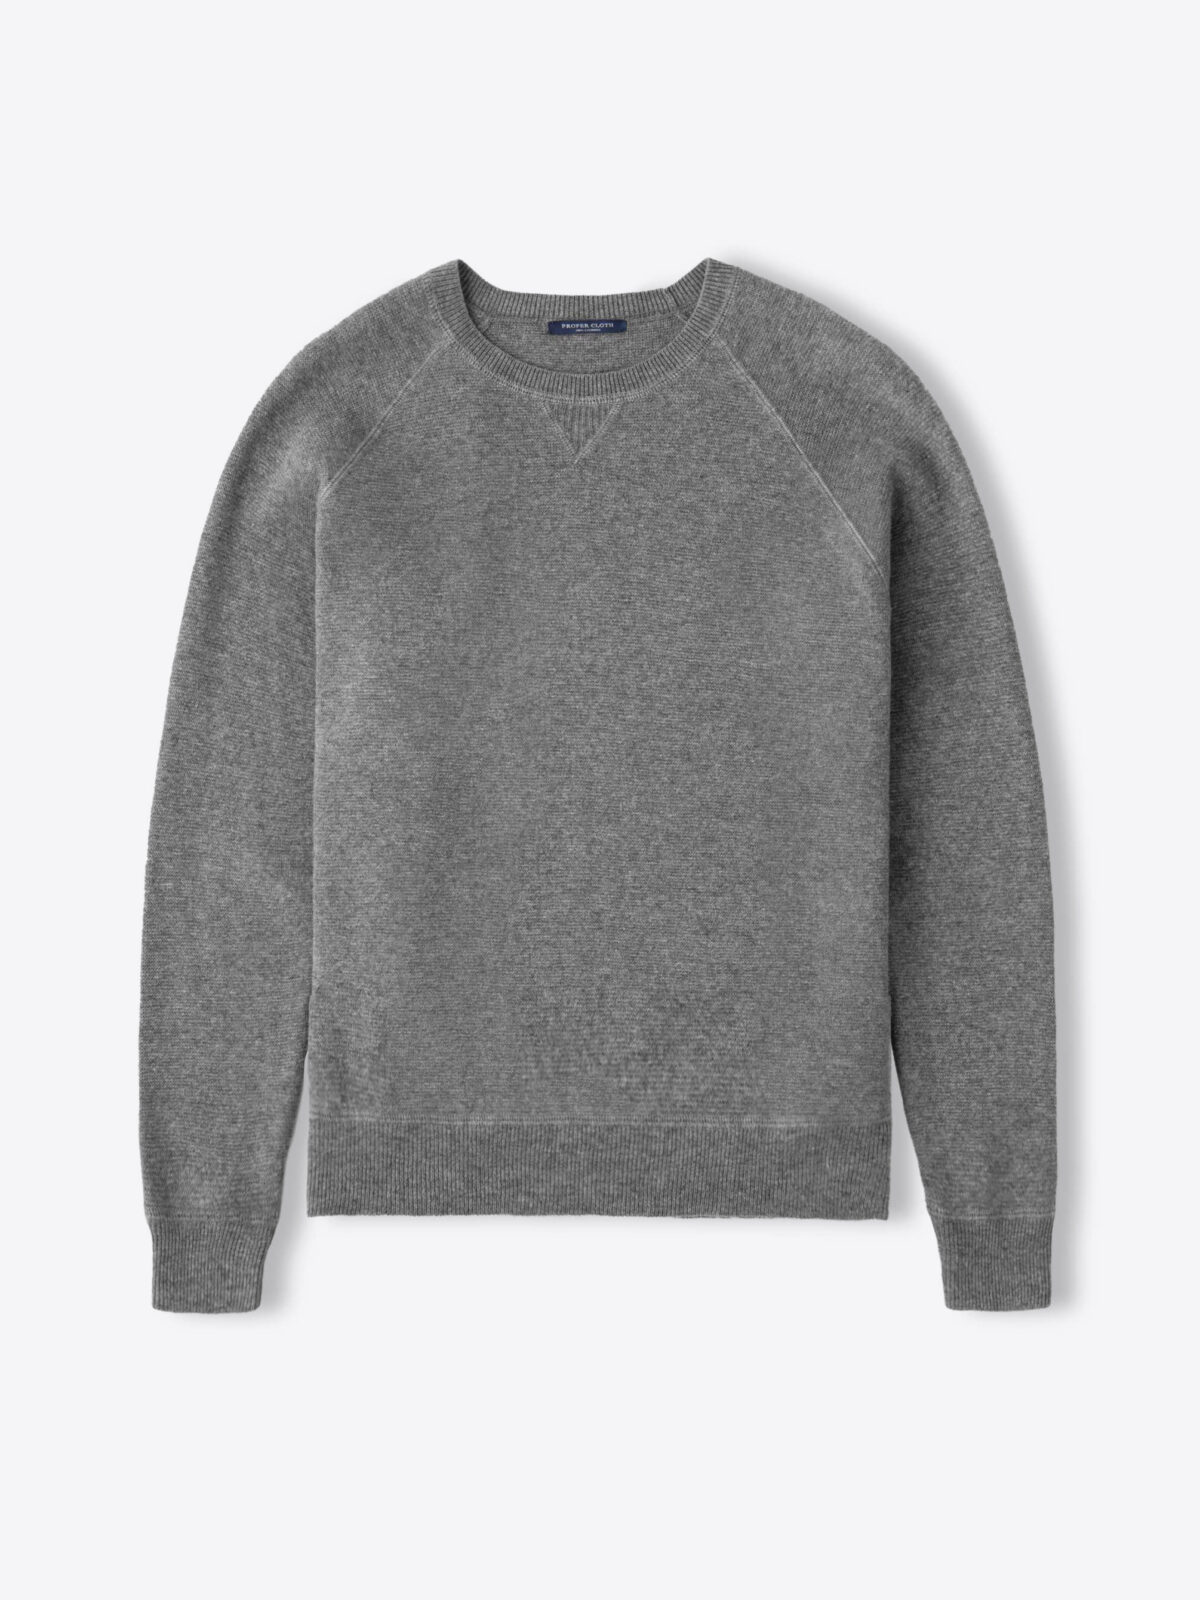 Grey Wool and Cotton Raglan Crewneck Sweater by Proper Cloth